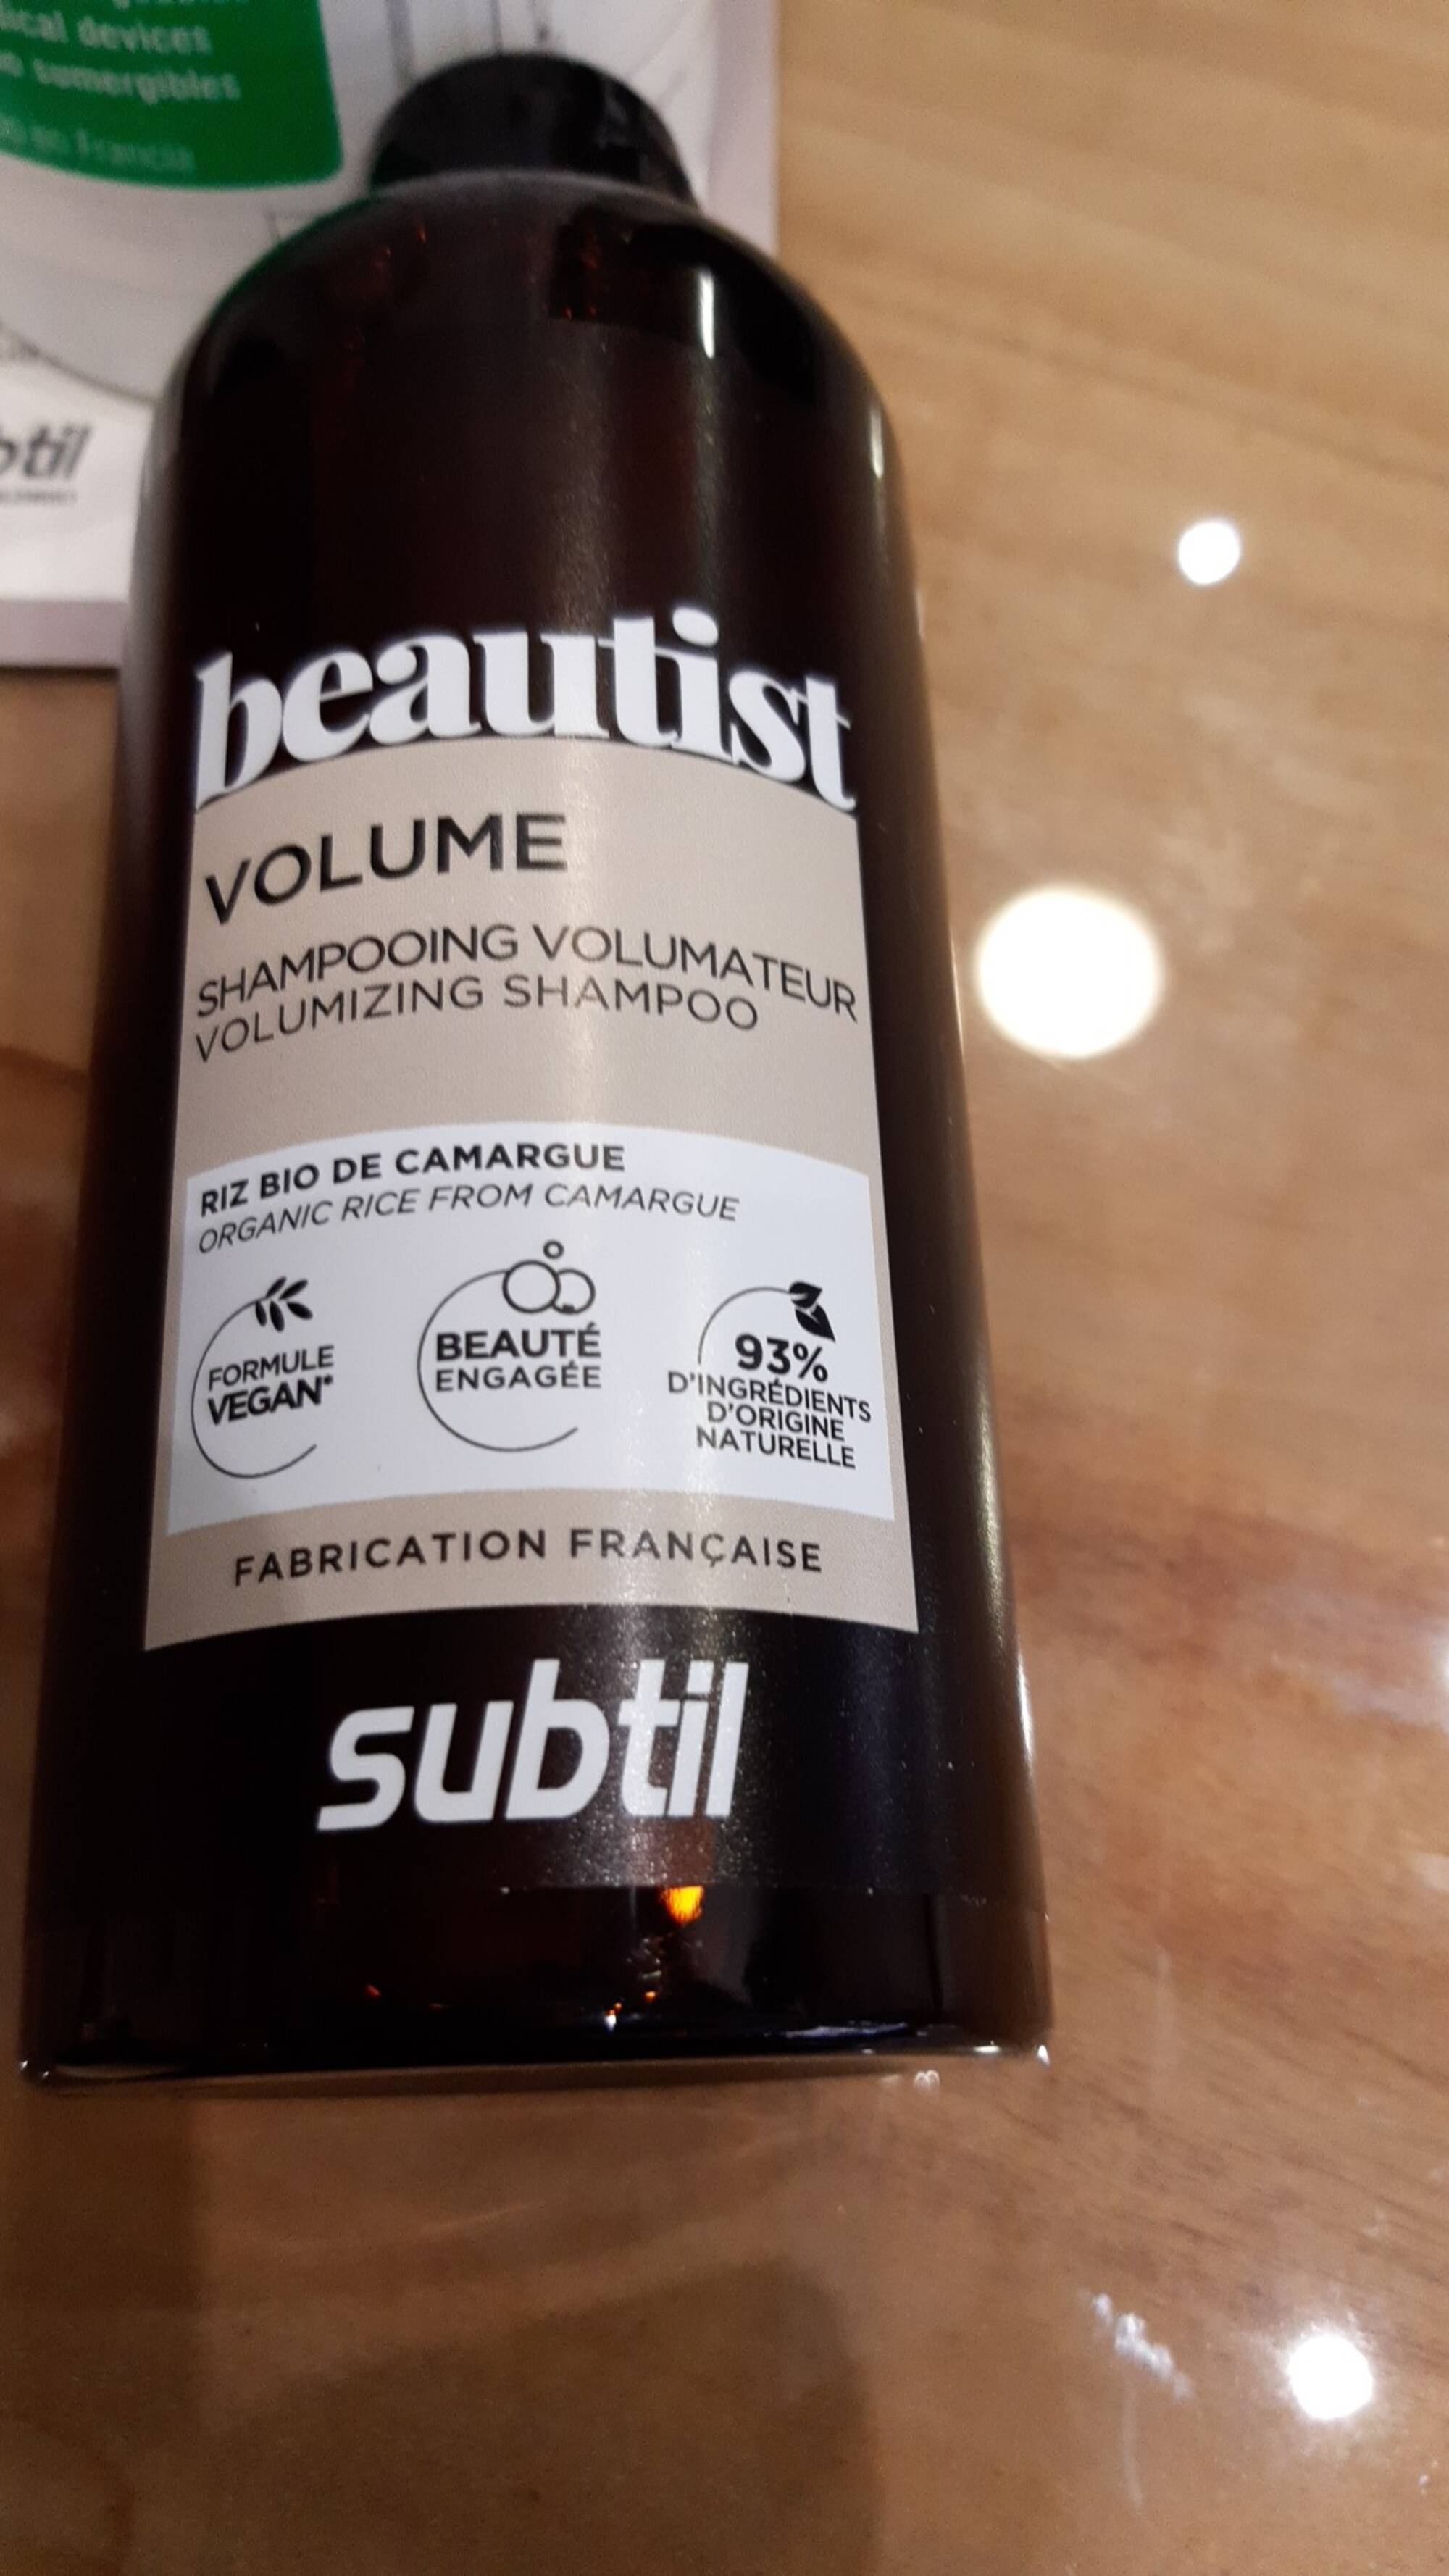 SUBTIL - Beautist - Shampooing volumateur